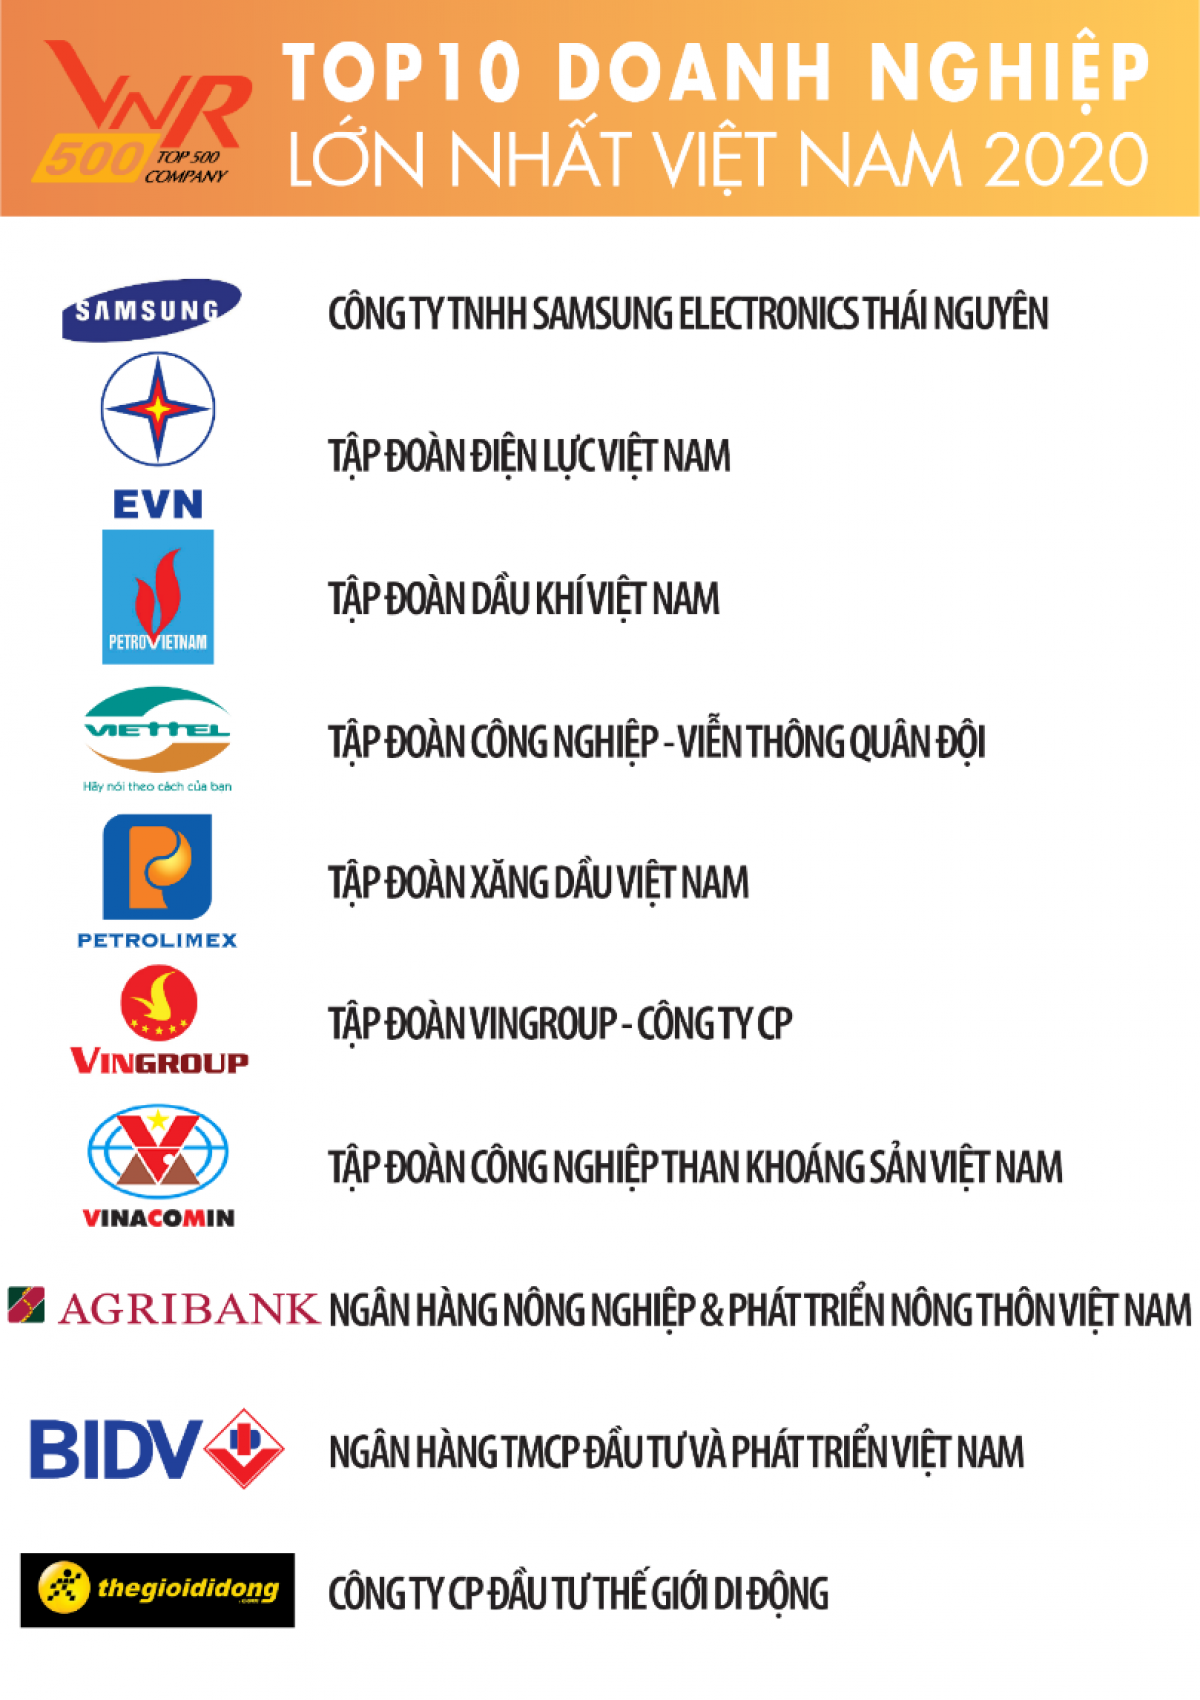 List of top 10 Vietnamese enterprises in VNR500 Ranking